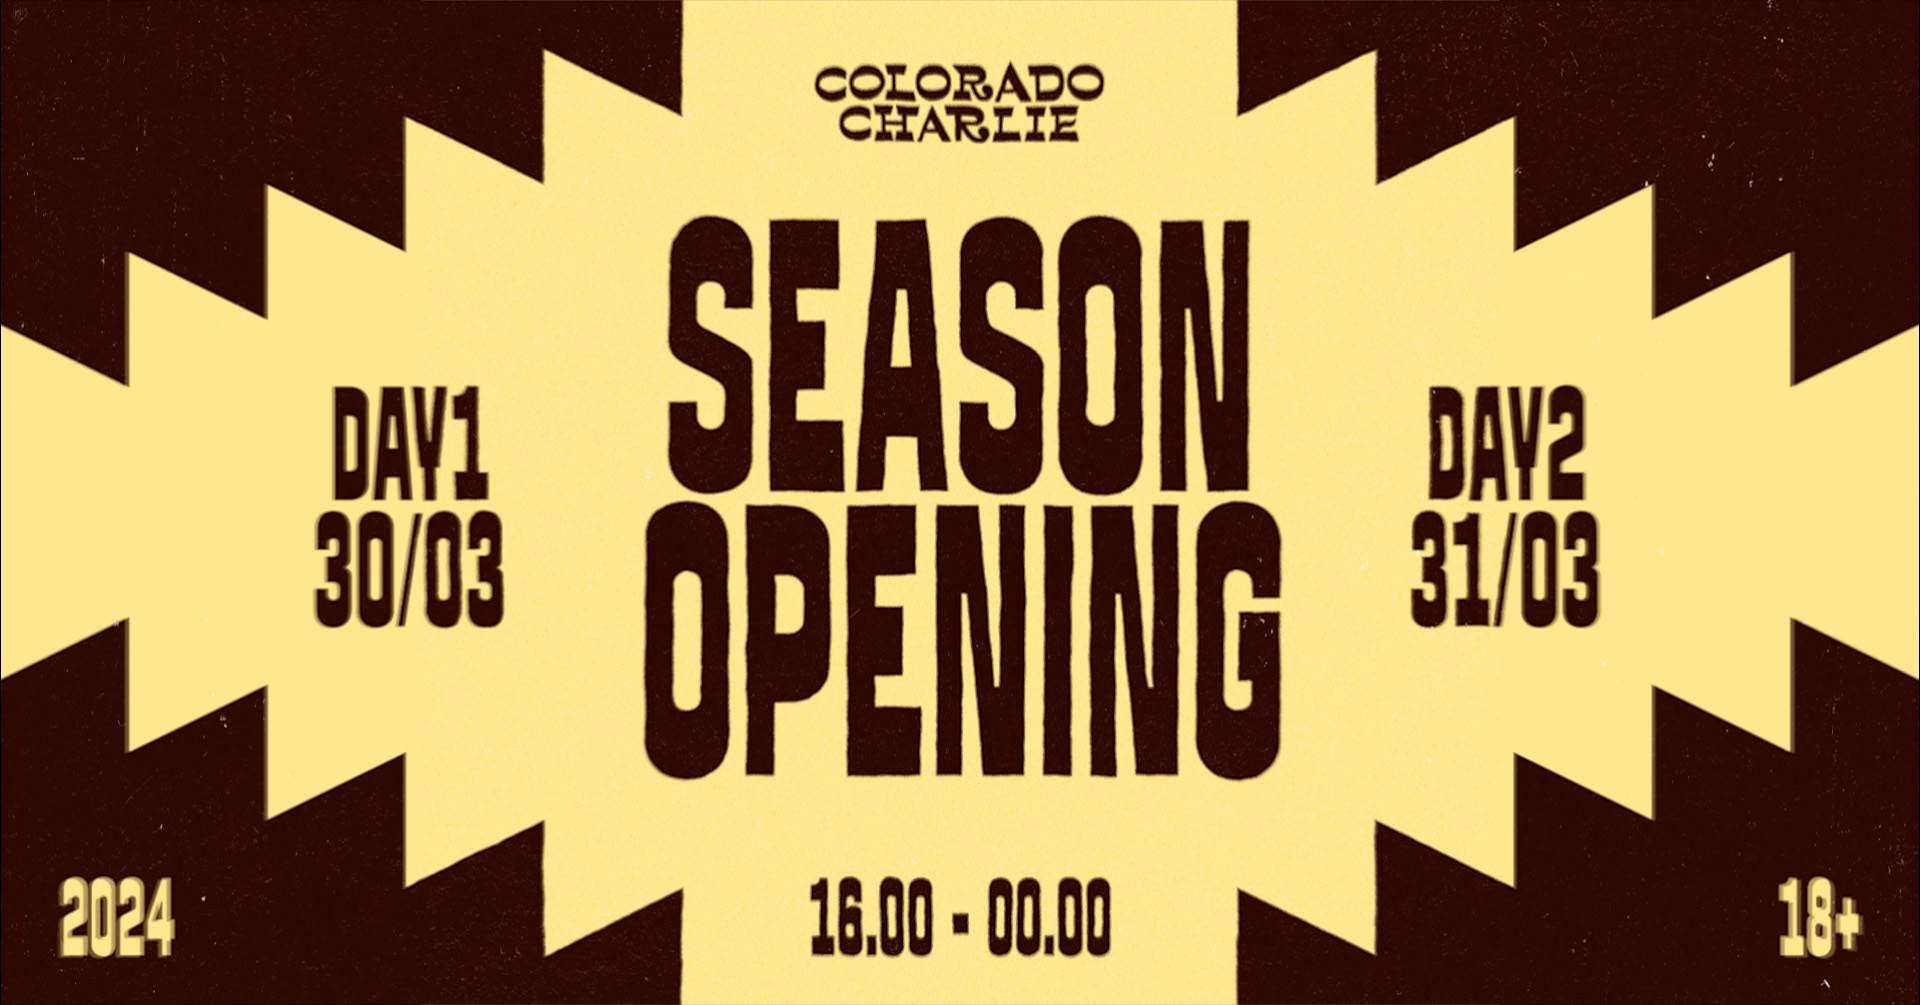 Colorado Charlie Season Opening Day 2 - フライヤー表